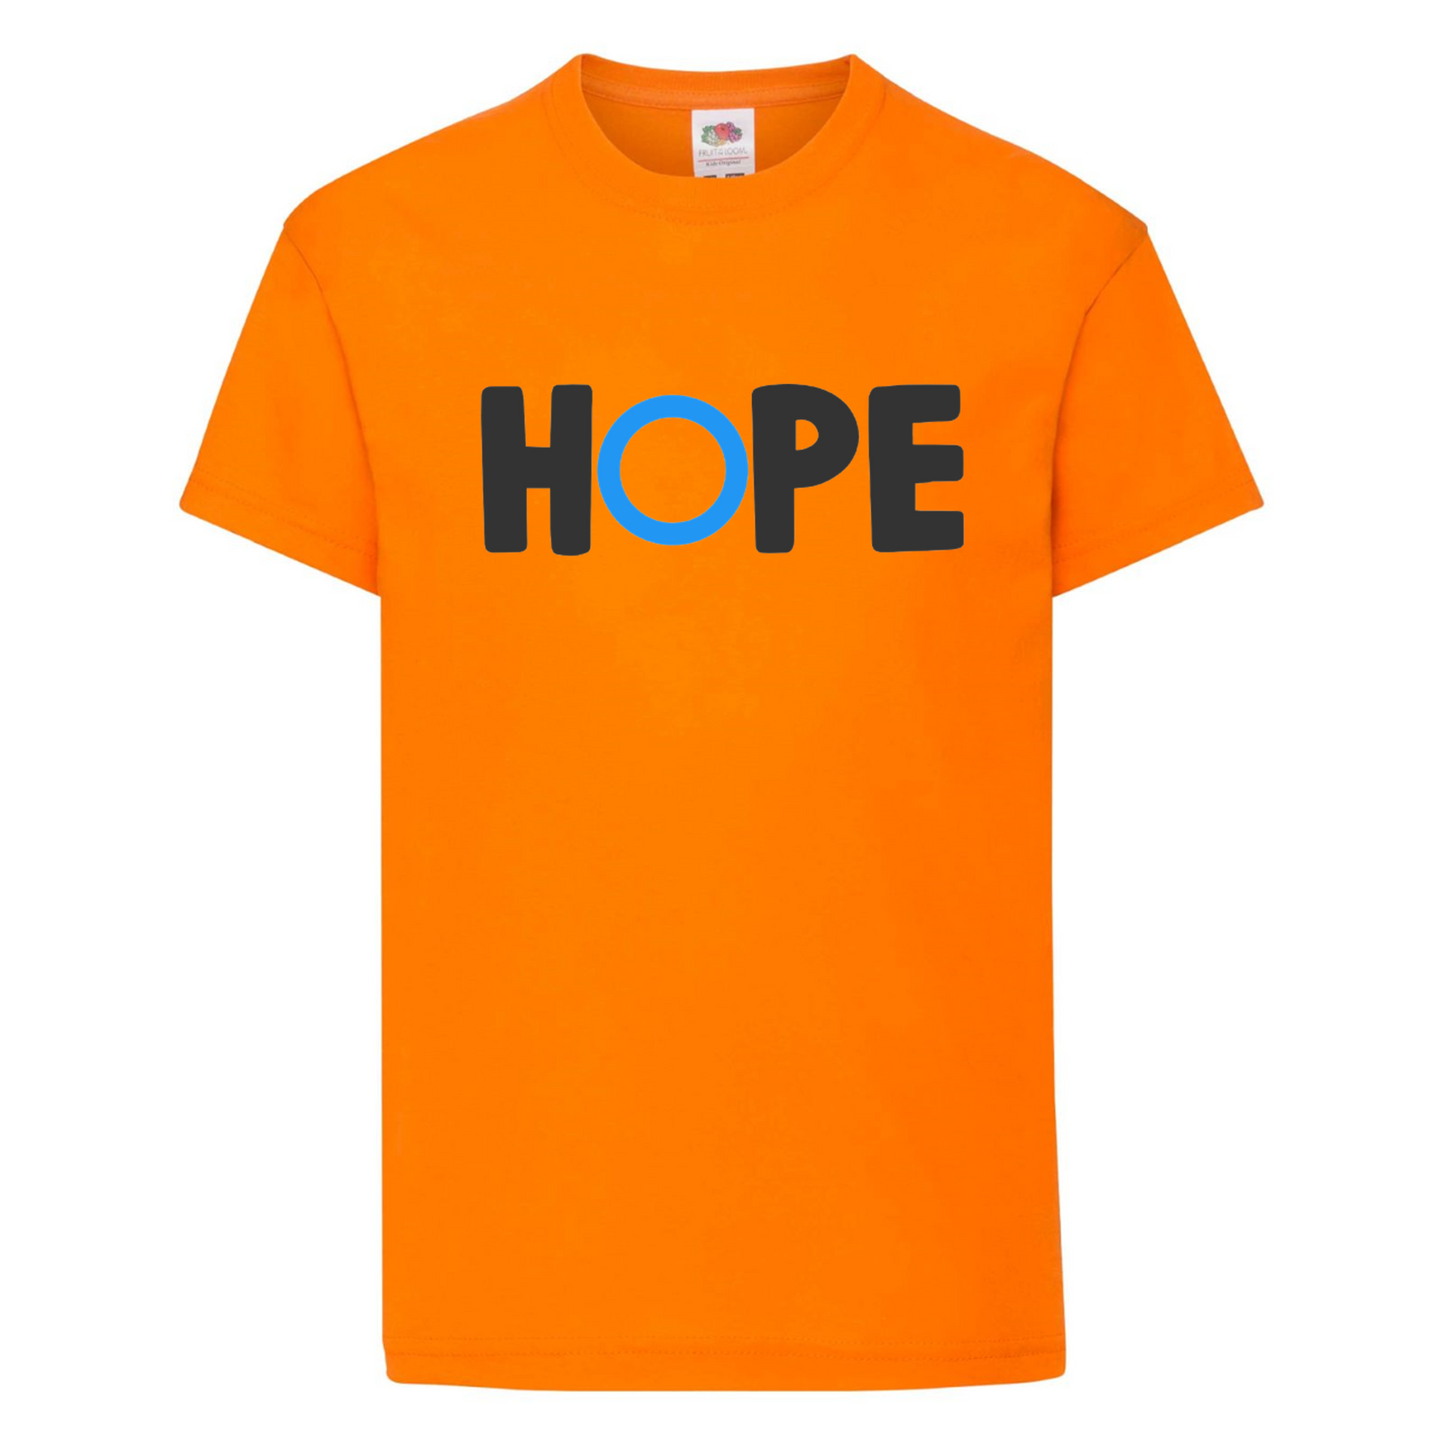 Hope Kids T Shirt